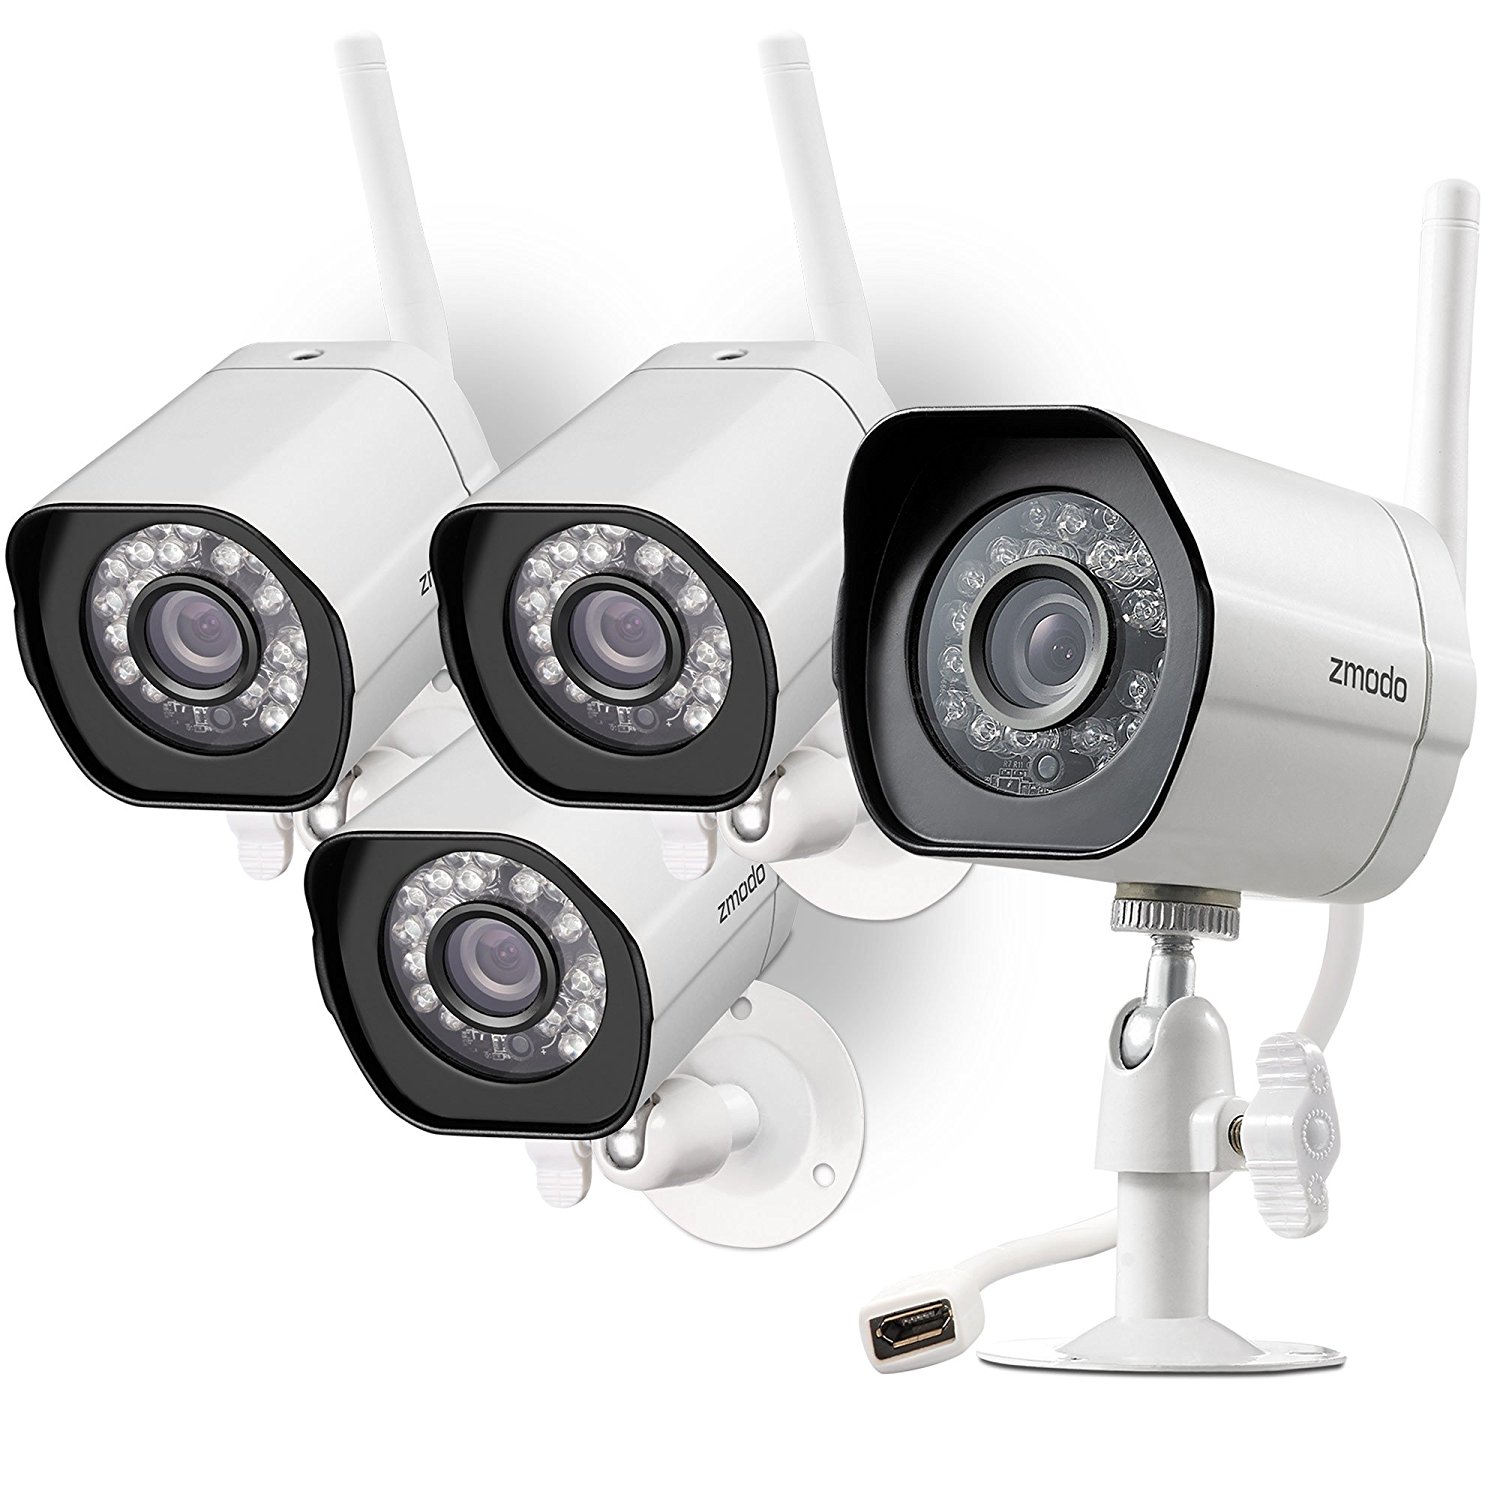 securityspy cameras